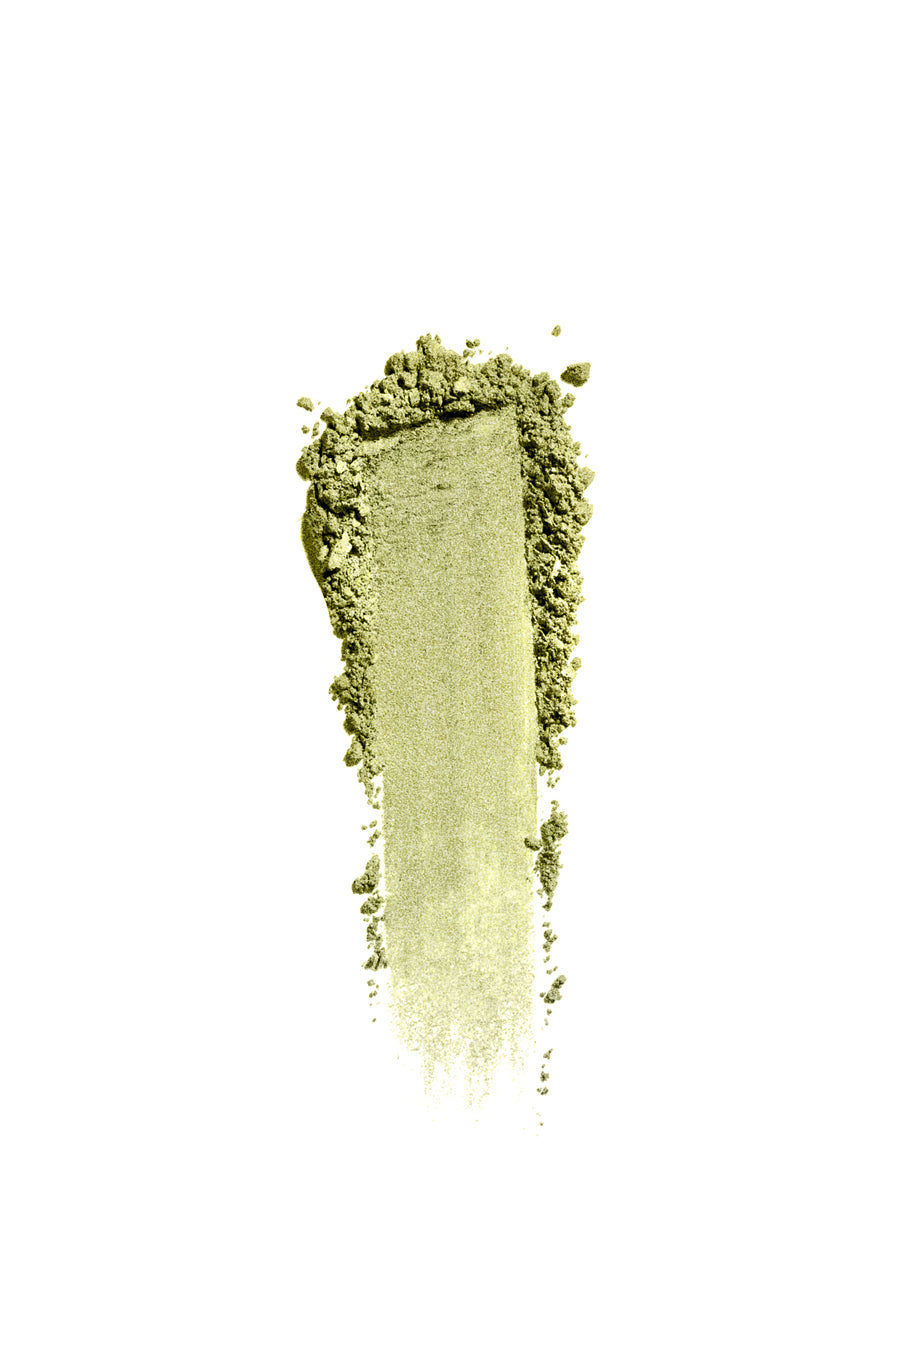 Shimmer Eyeshadow #33 - Warm Green - Blend Mineral Cosmetics